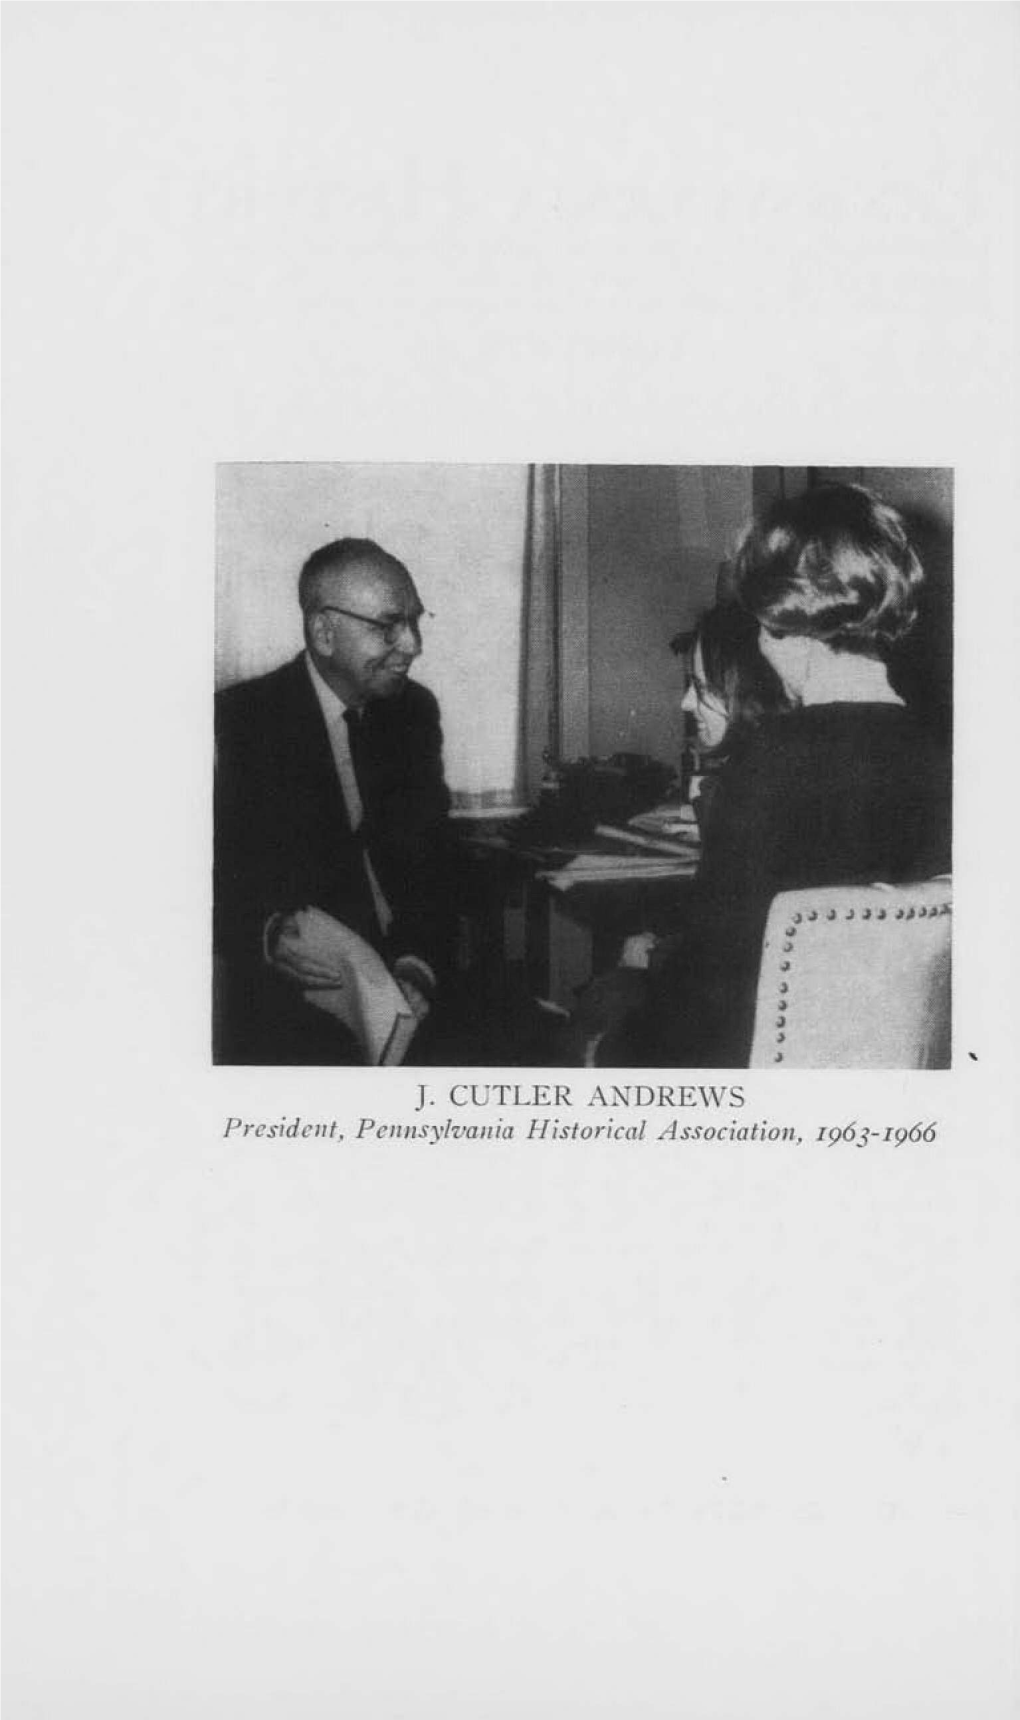 J. CUTLER ANDREWS Prcsidenti, Pennsylvania Historical Association